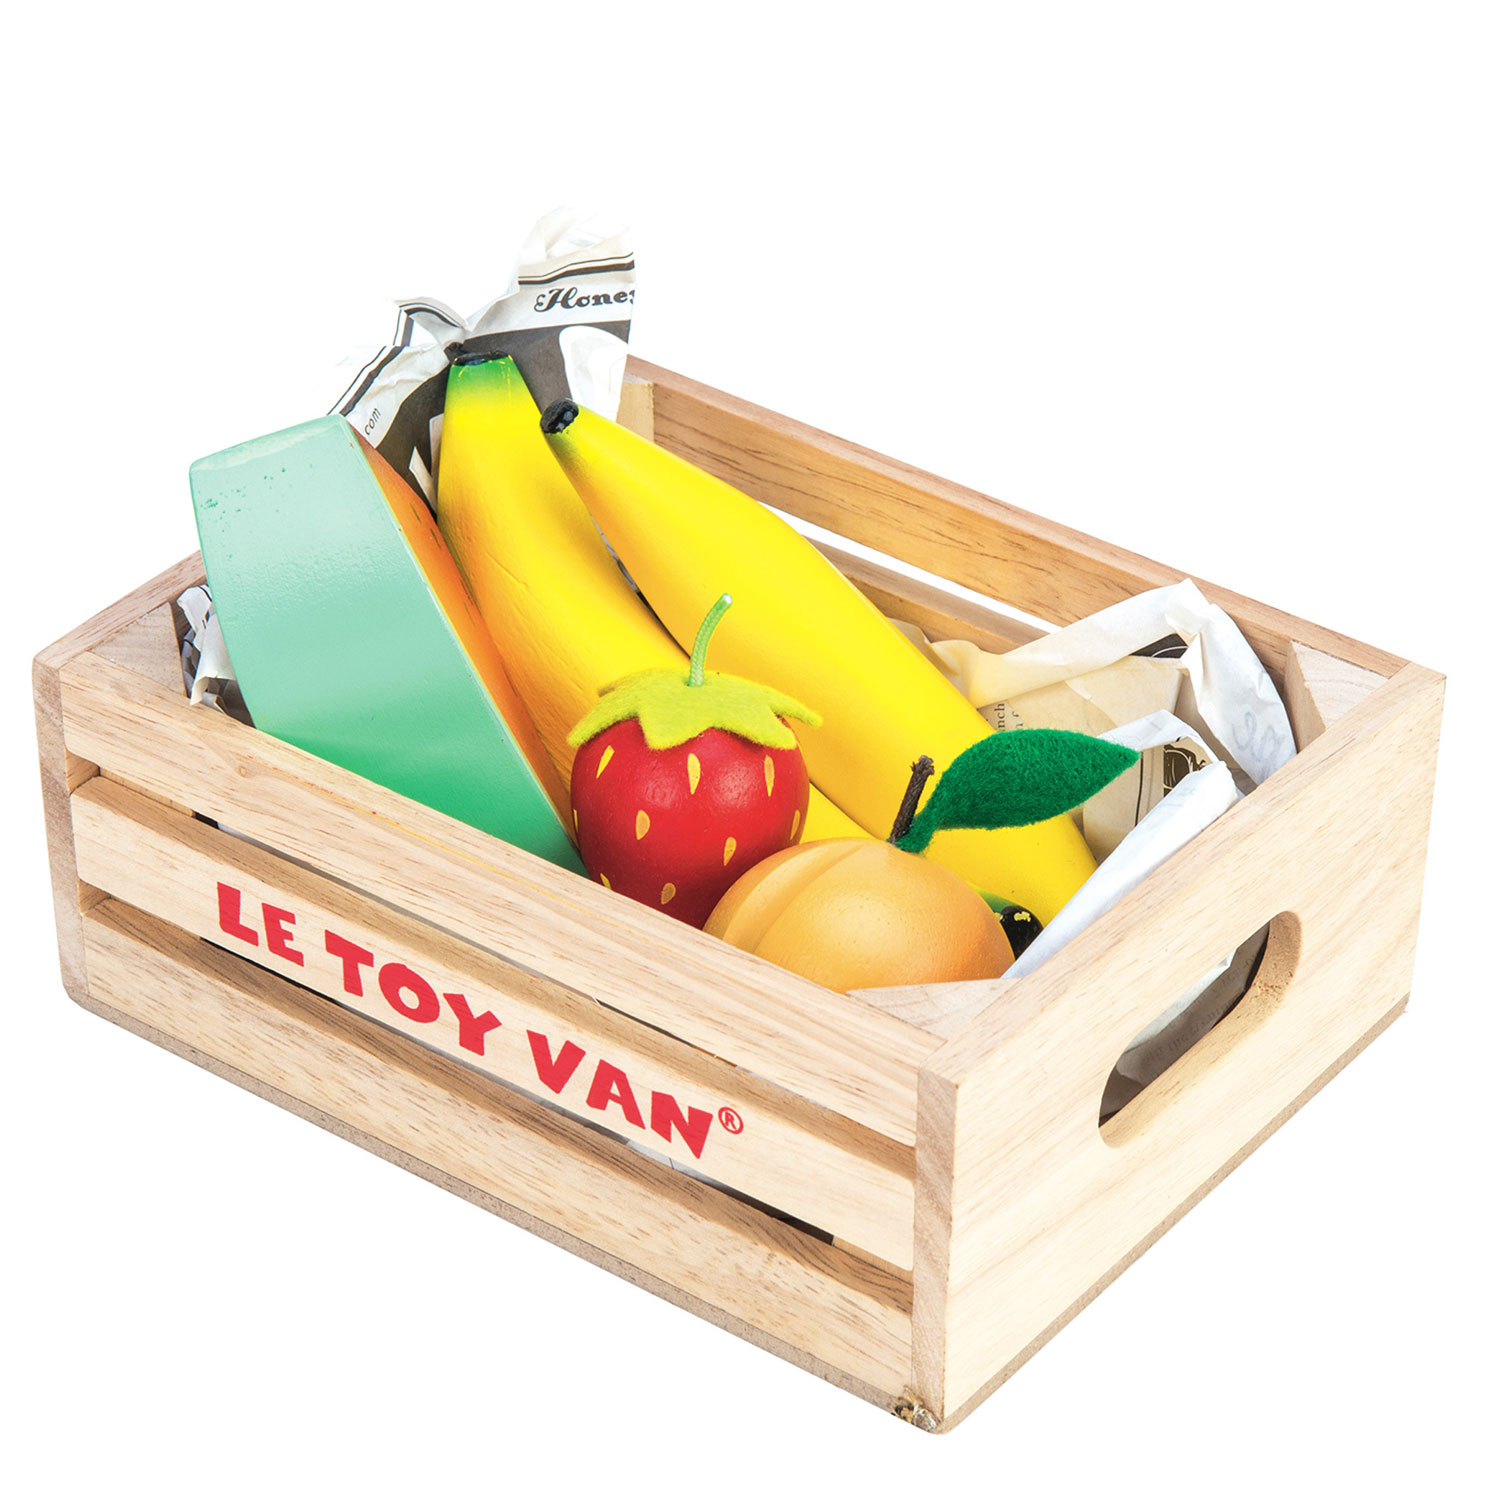 Gemischtes Obst Marktkiste / Smoothie Fruit Wooden Market Crate  - 2022